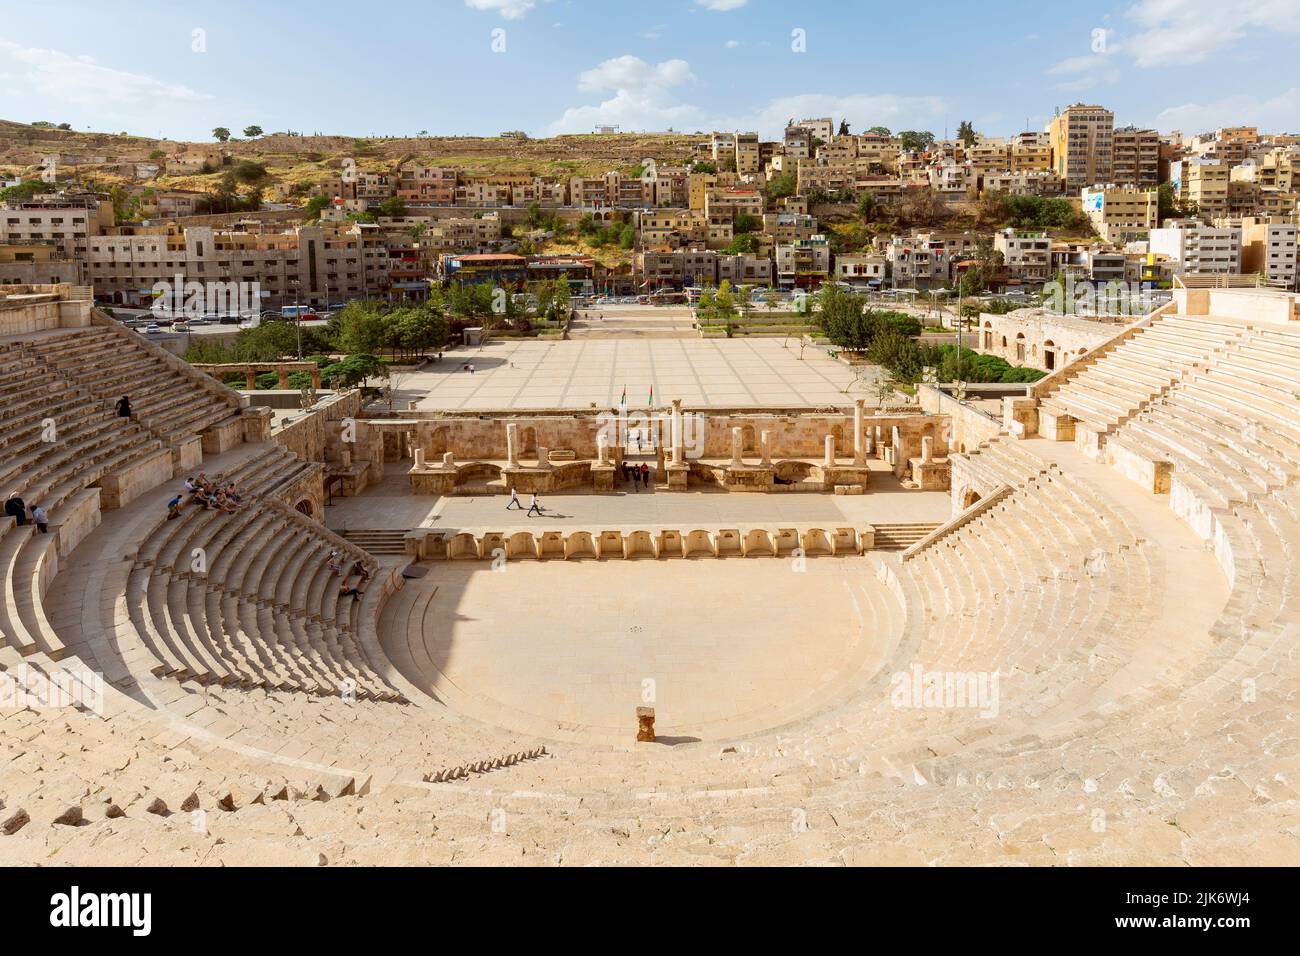 Jordan, Amman : View of the Roman Theater and the city of Amman, Jordan Stock Photo